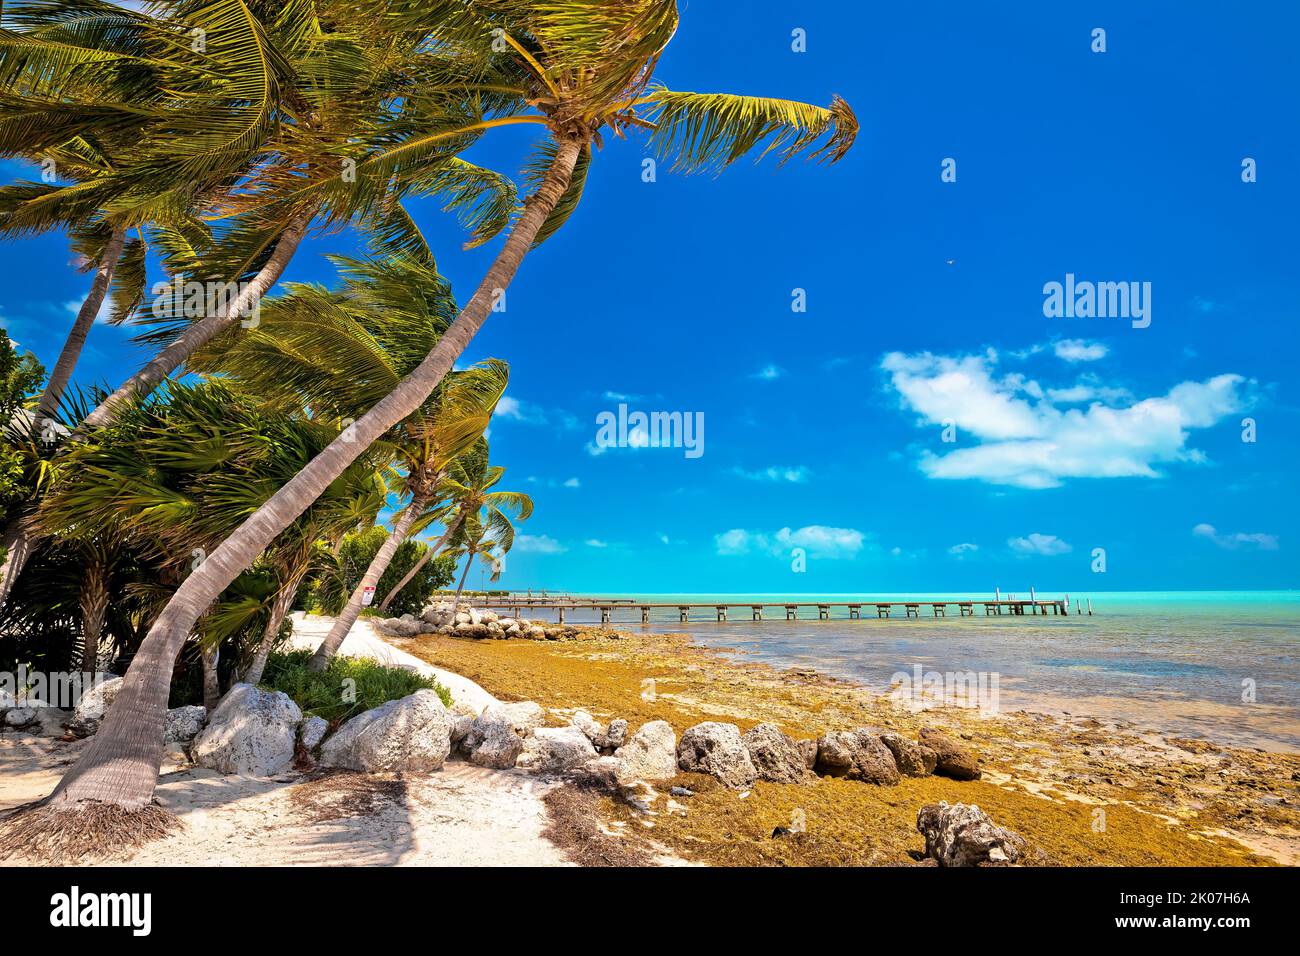 Idyllic palm beach in Islamorada on Florida Keys, Florida stare of USA Stock Photo